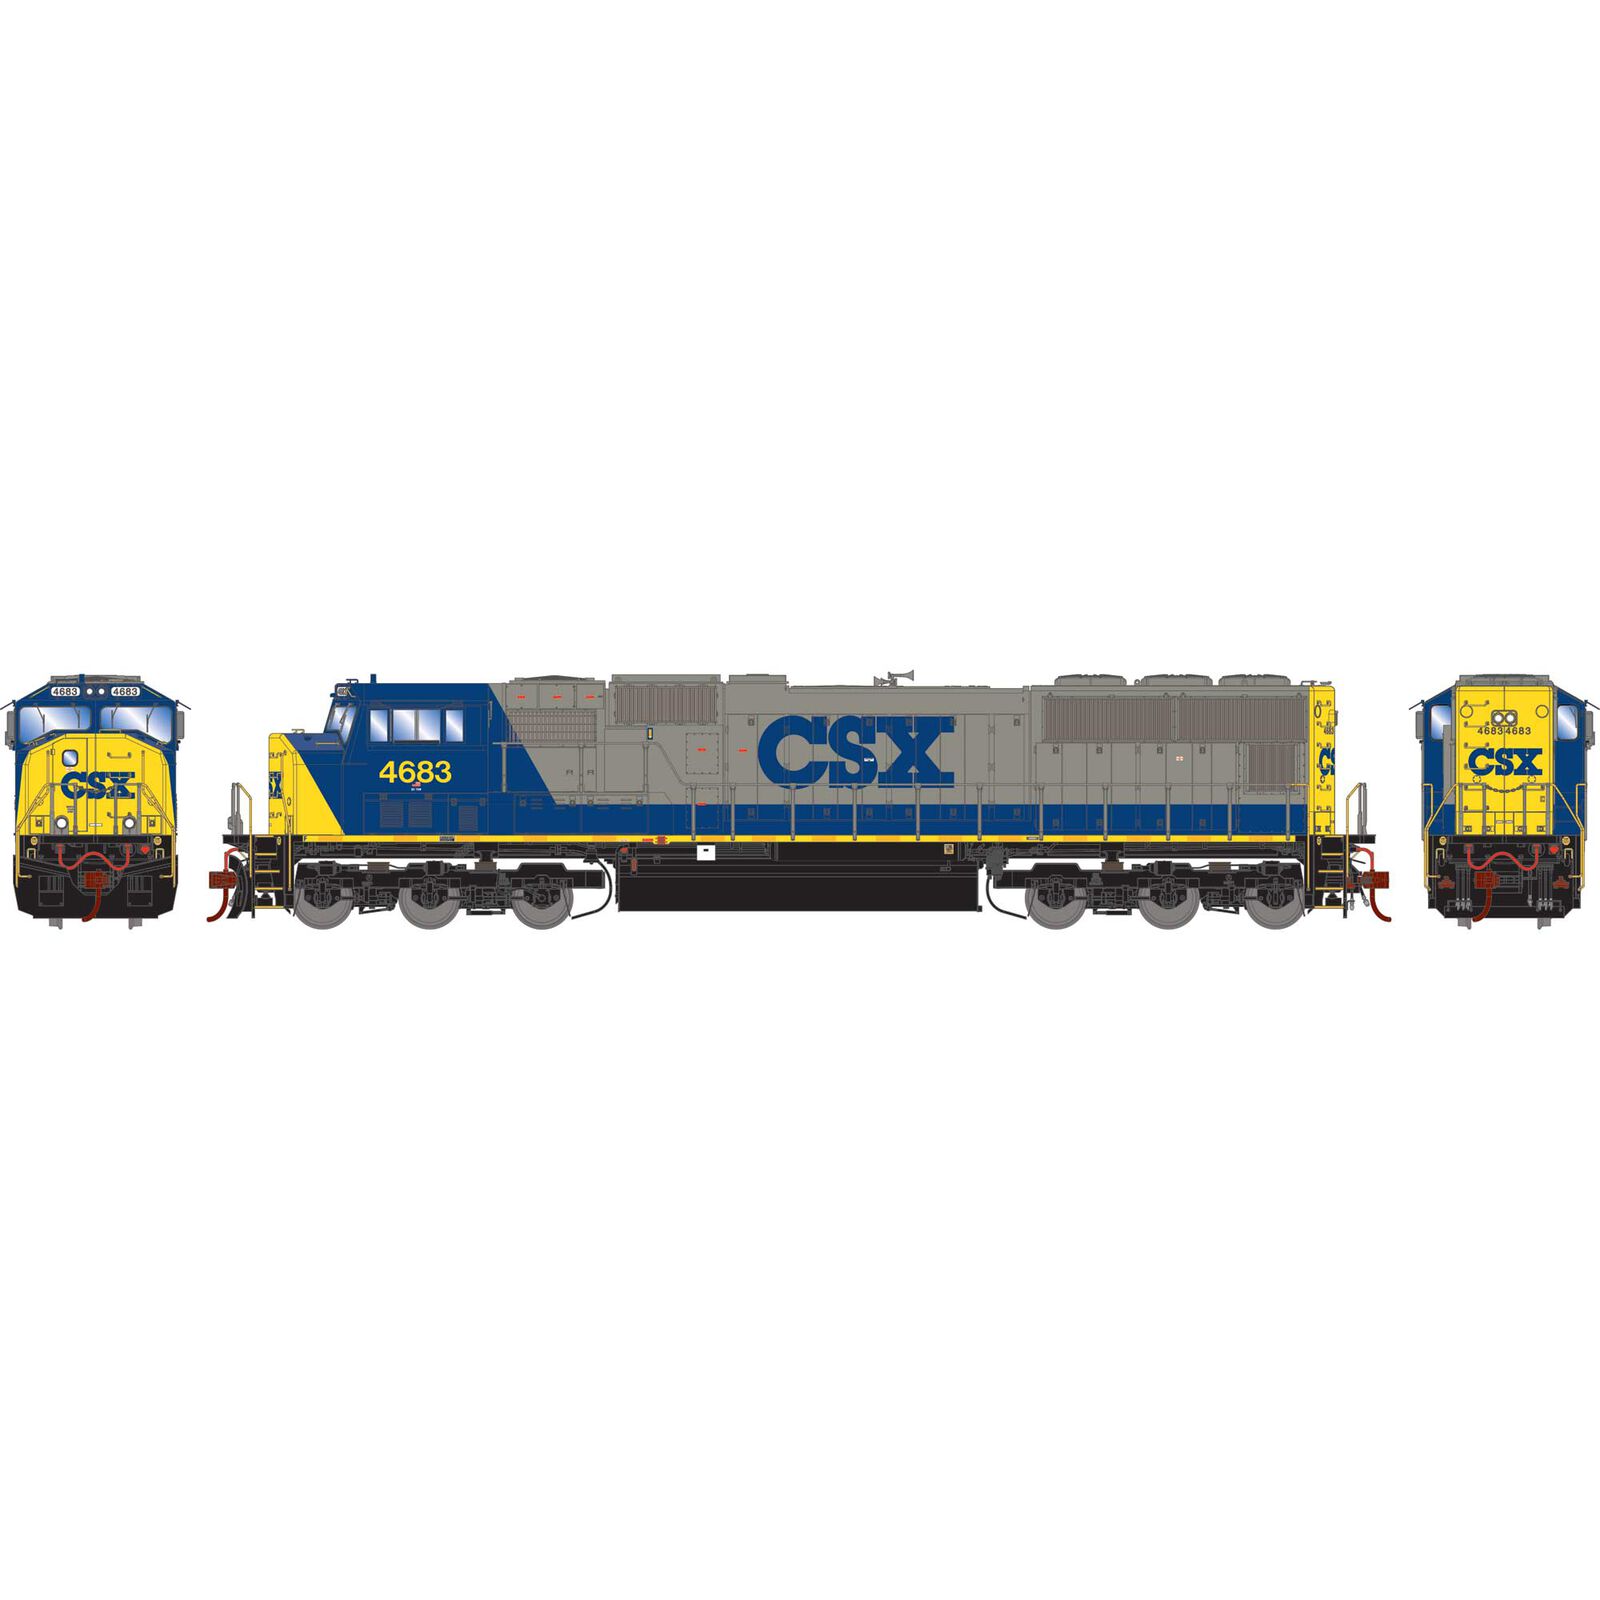 HO SD70M Locomotive with DCC & Sound, CSX / YN2 #4683